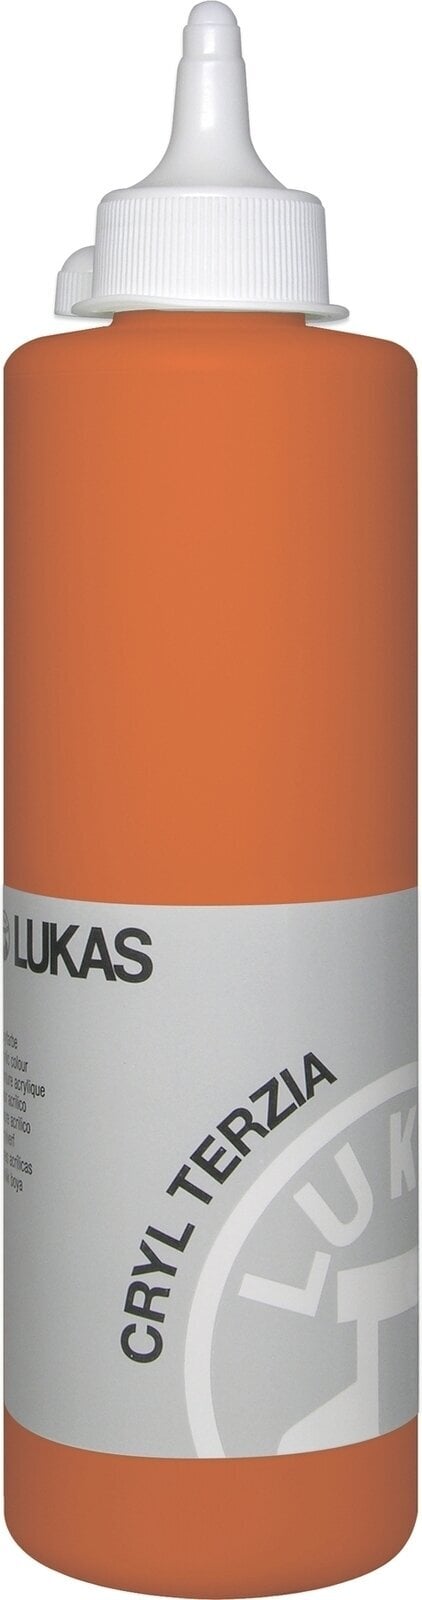 Peinture acrylique Lukas Cryl Terzia Peinture acrylique 500 ml Cadmium Orange Hue